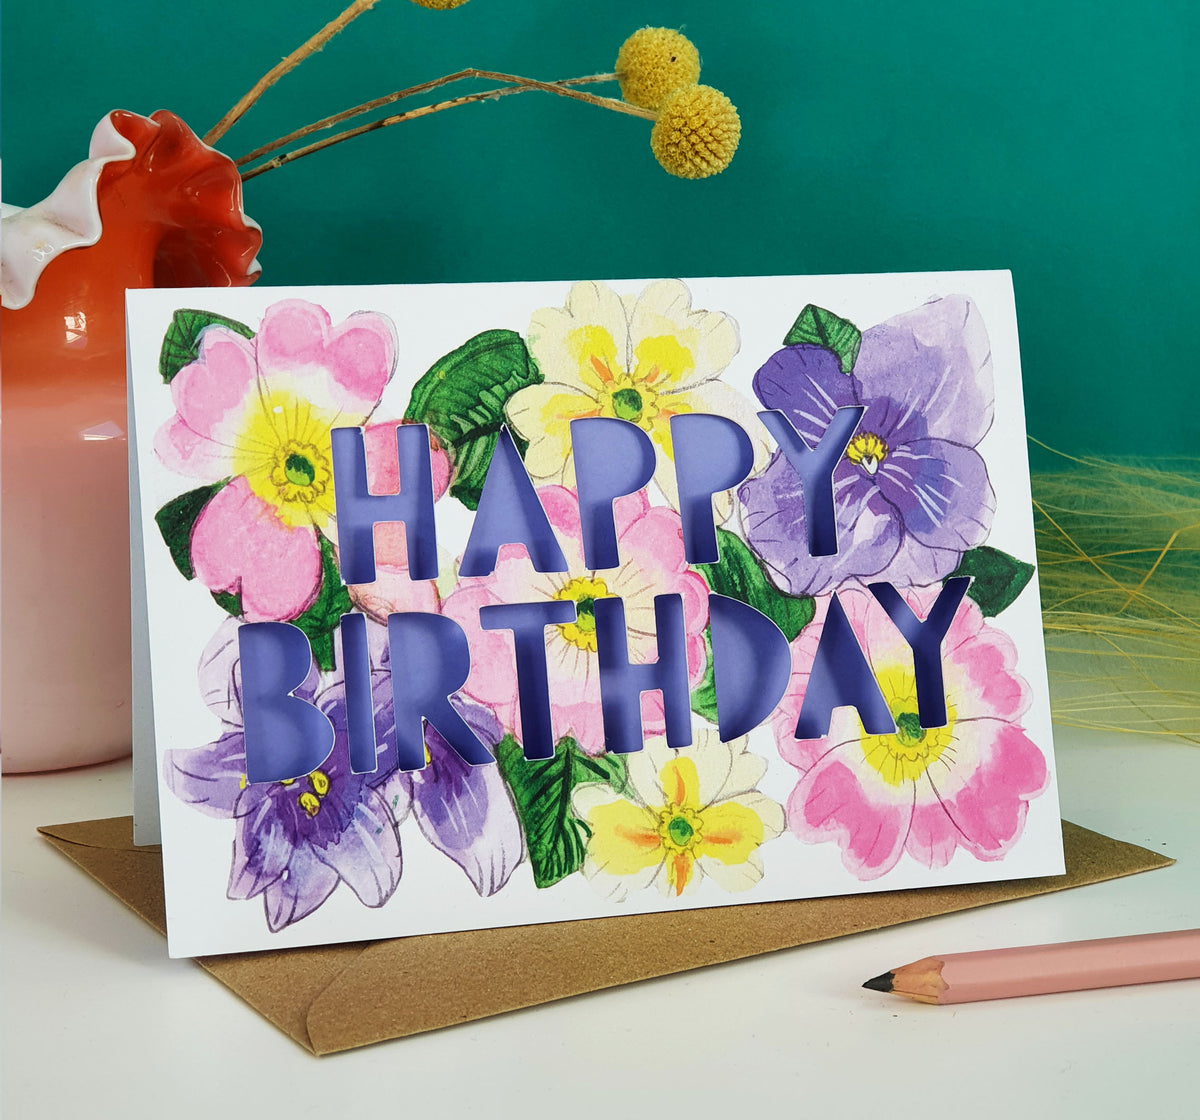 Primrose and Violet February Birth Flower Paper Cut Birthday Card